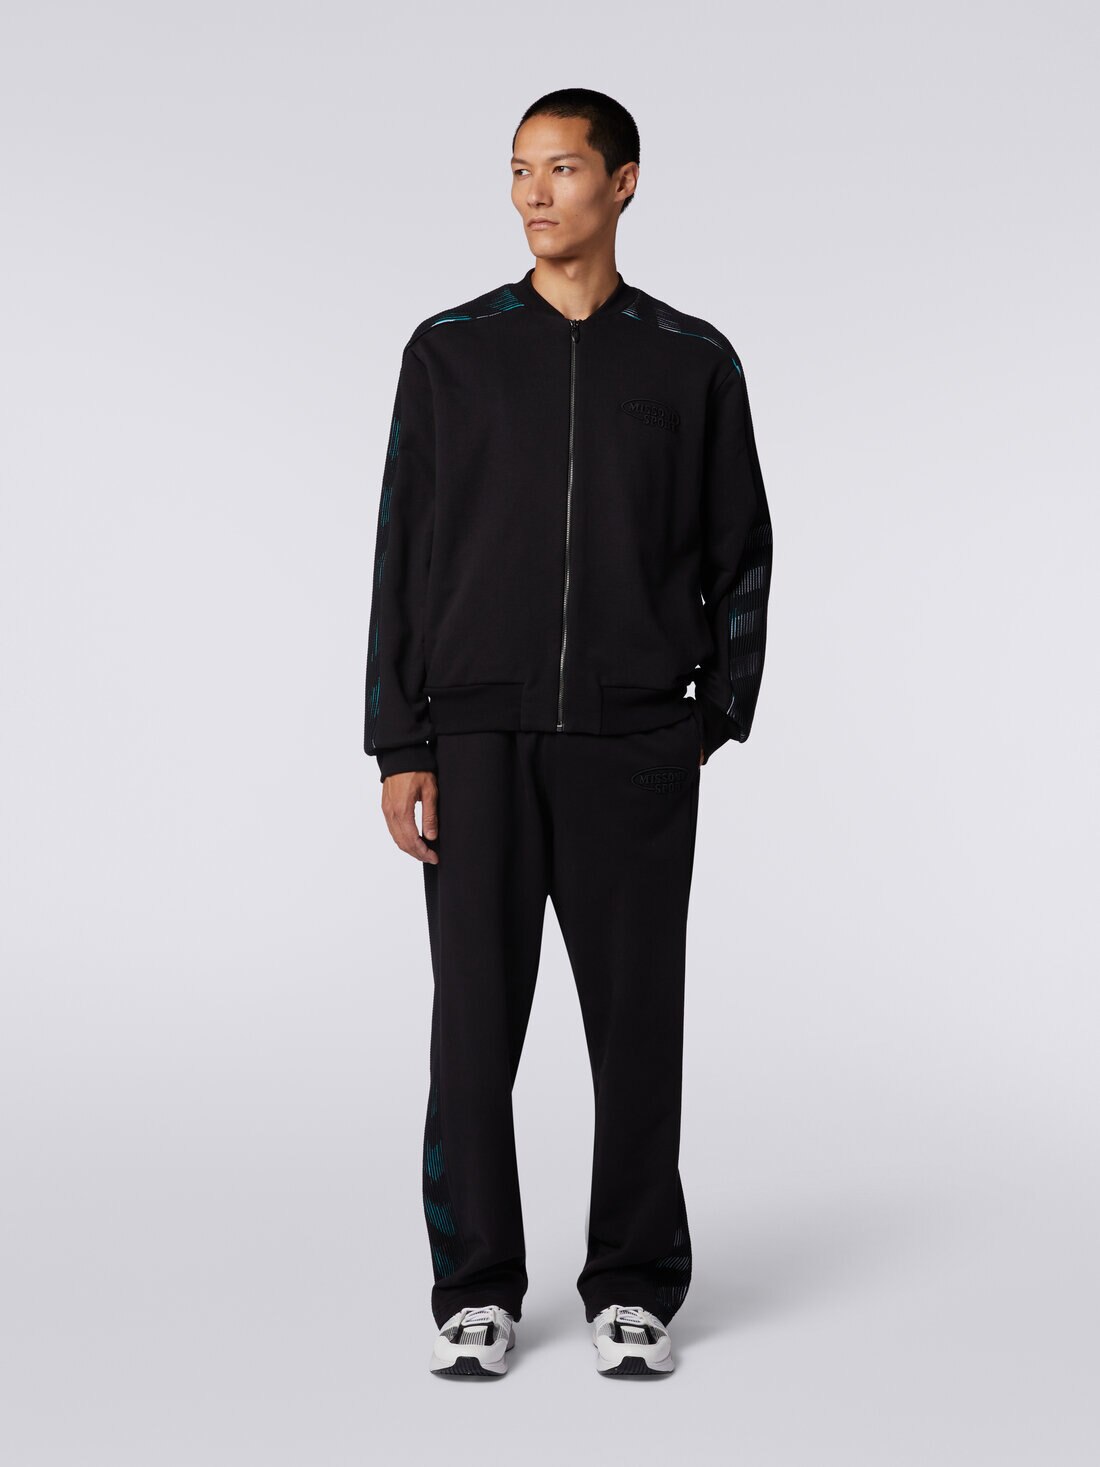 Cardigan in cotton fleece with zigzag knit details, Black    - TS24SW0BBJ00INS91J4 - 1